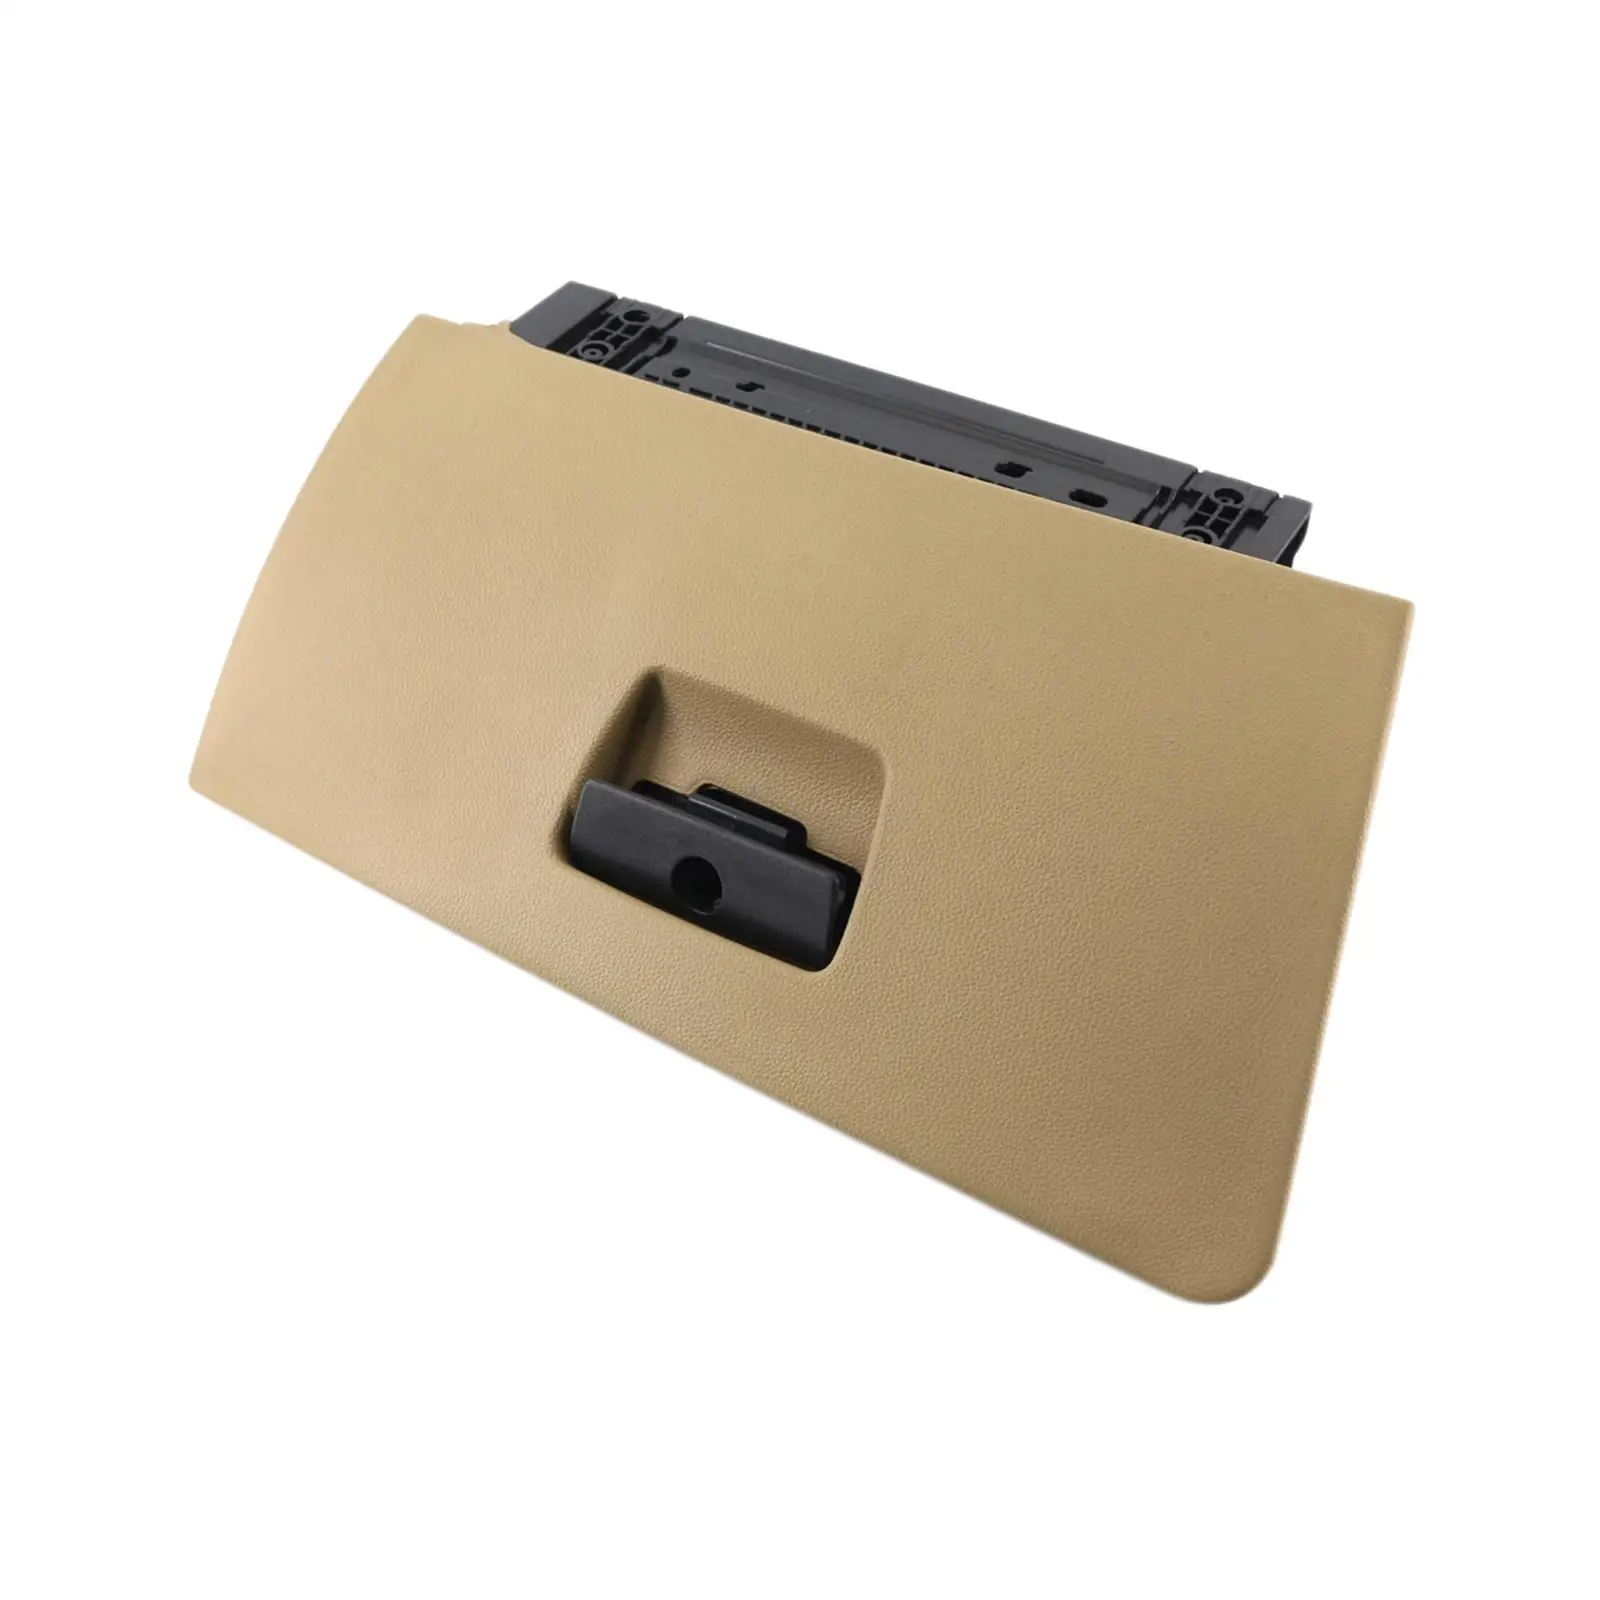 Glovebox Replaces Accessory Durable Professional Portable Parts Glove Box Storage Compartment for BMW E90 D91 E92 06-13